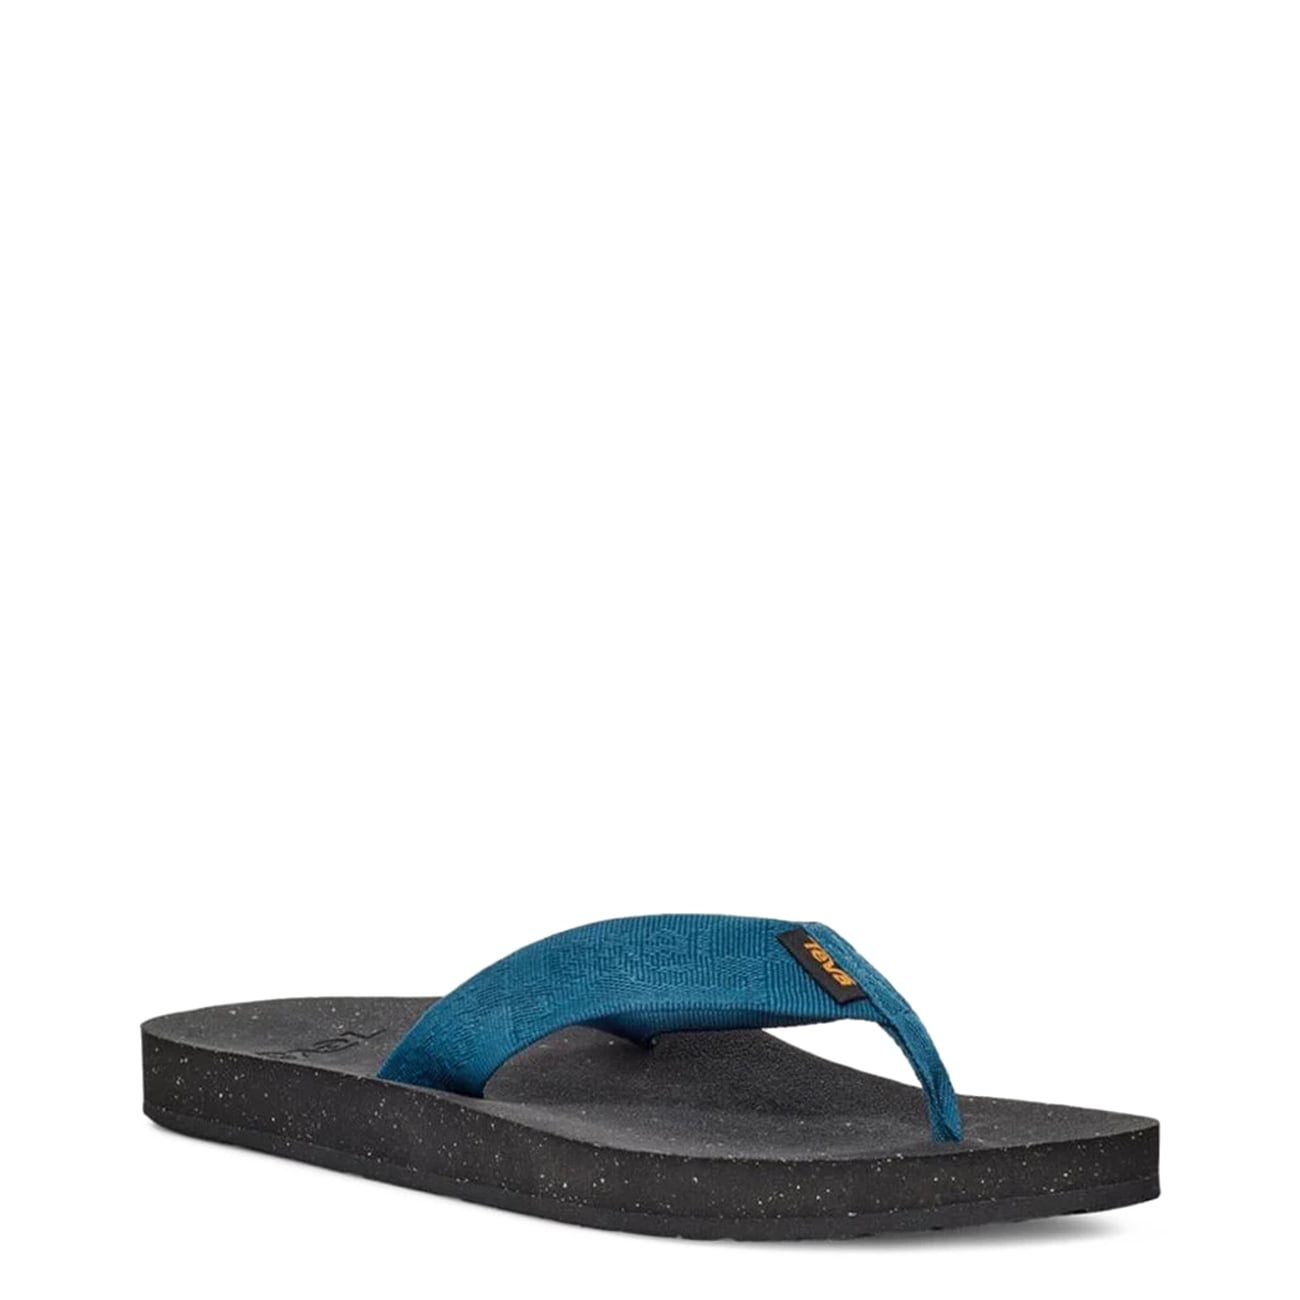 Men's Reflip Flip Flop Sandal